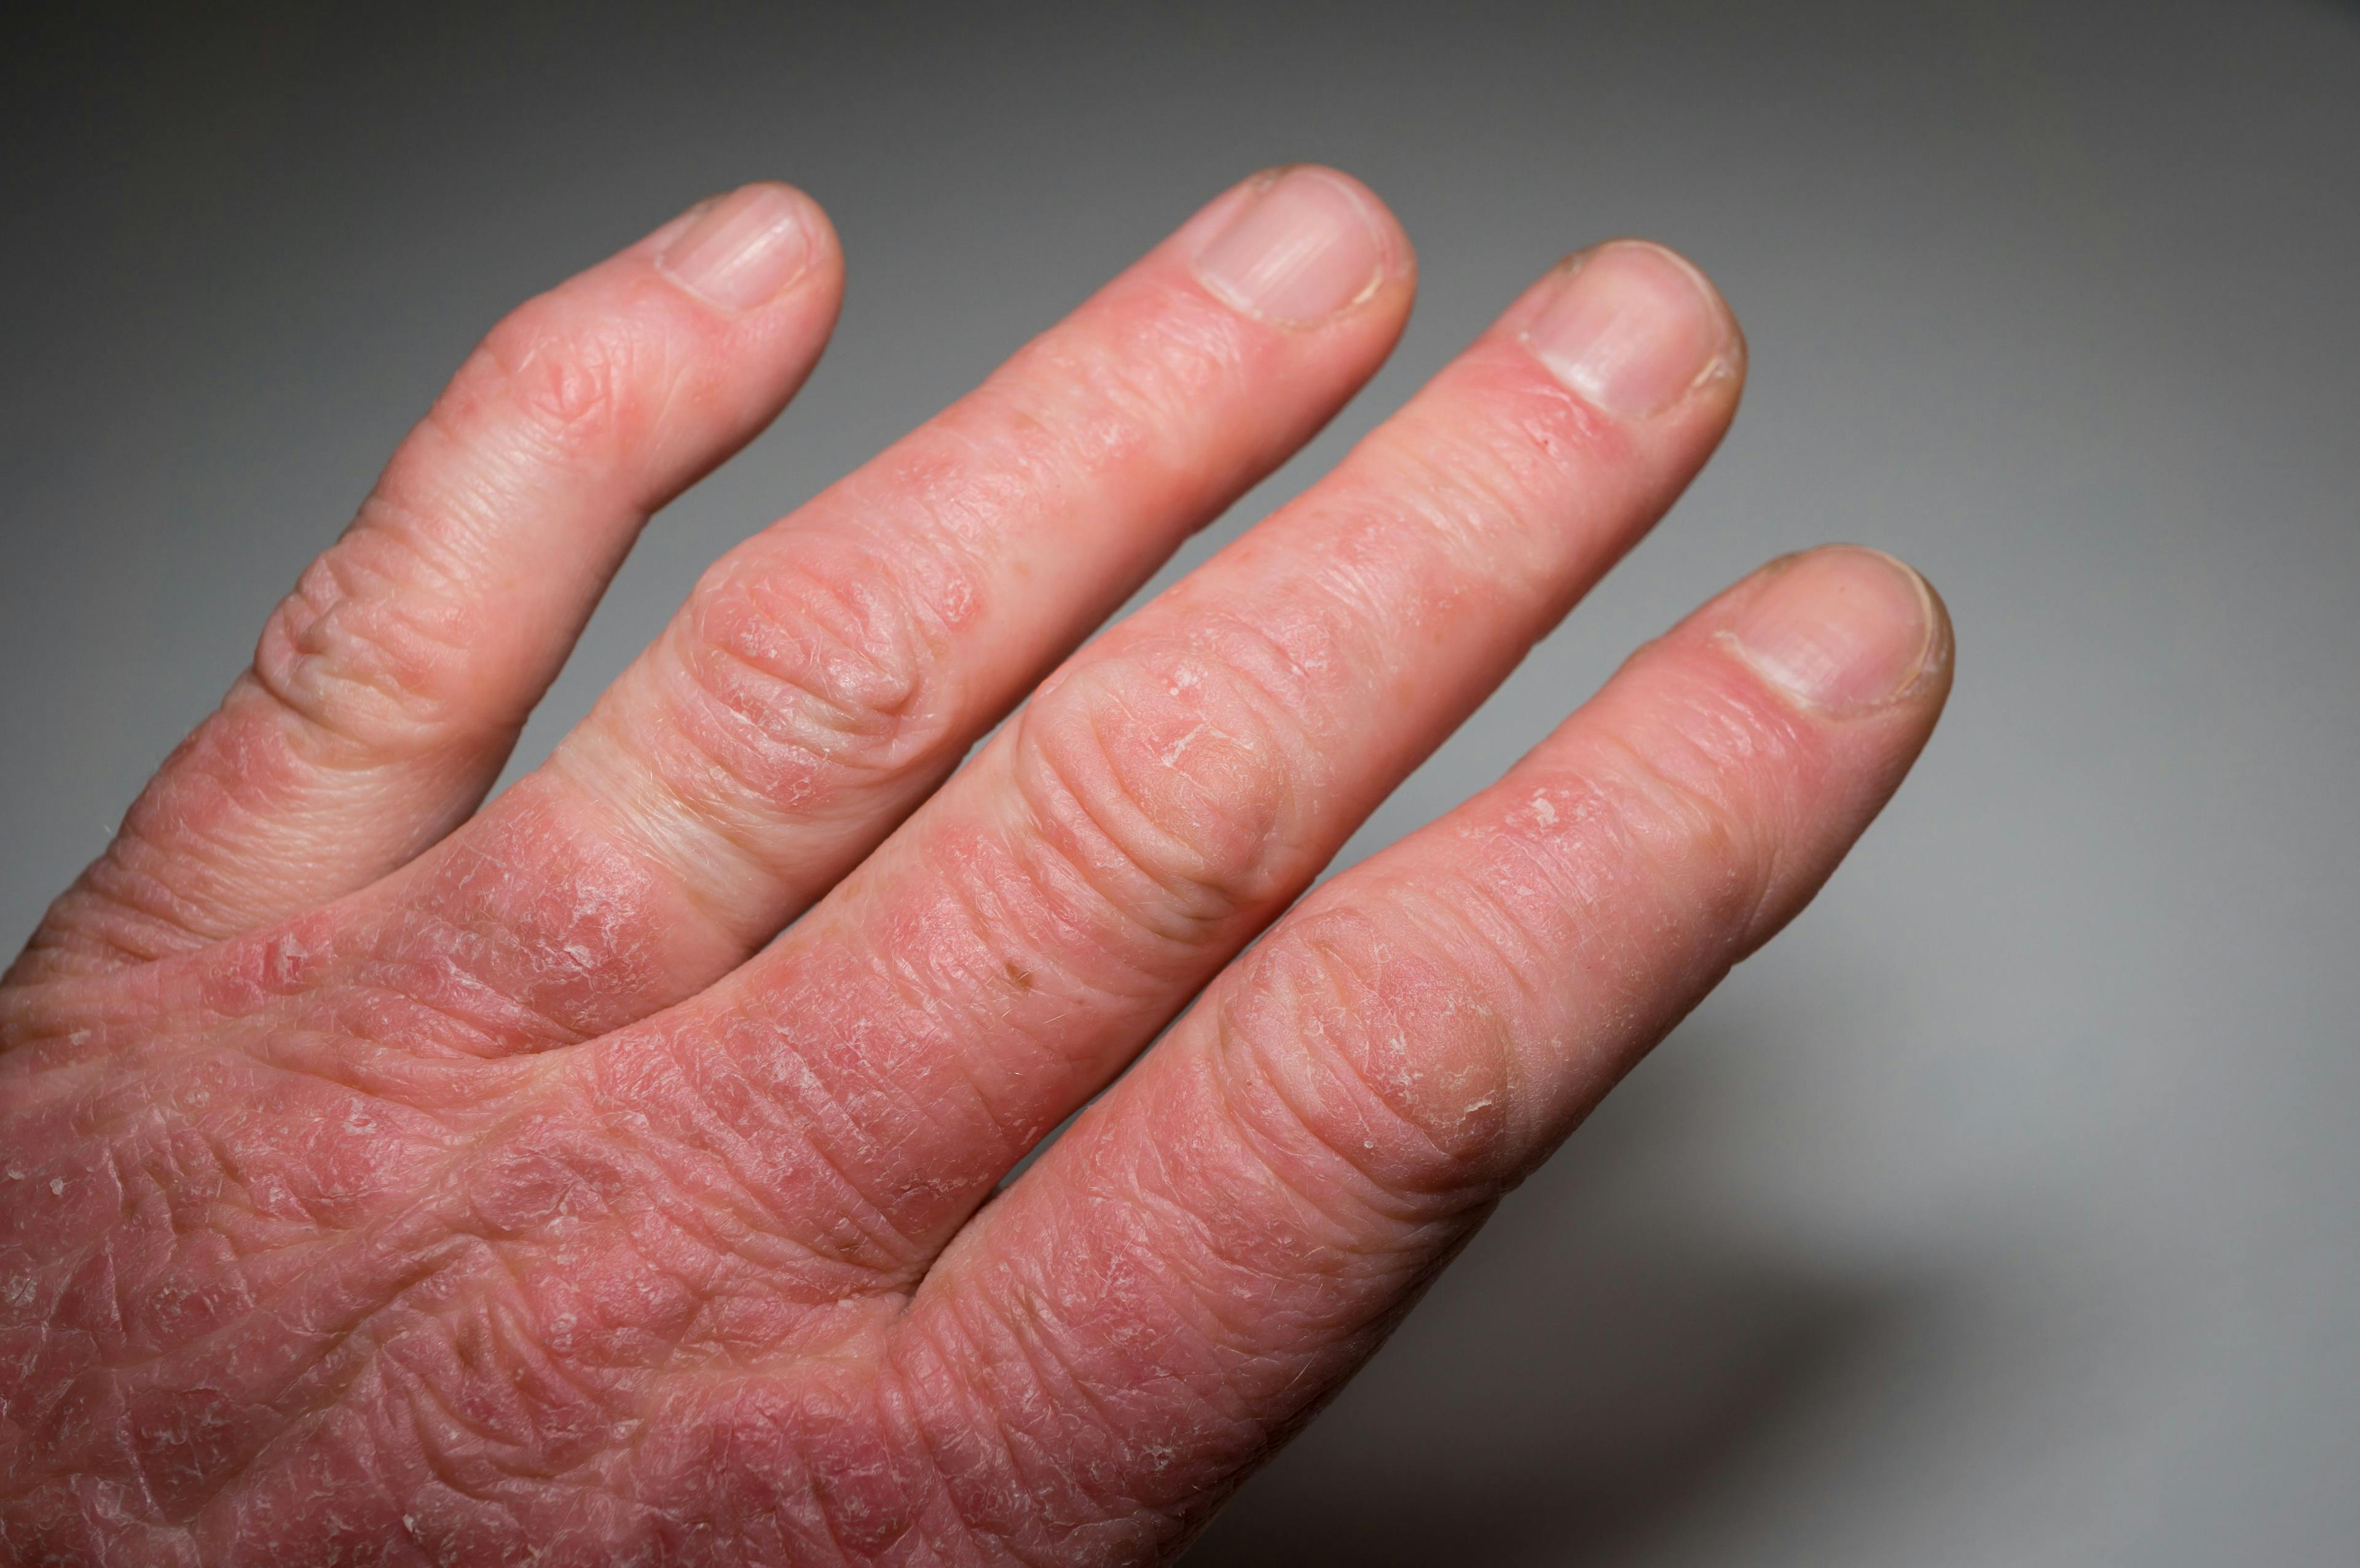 Hand with psoriatic arthritis | Image credit: Iri-s - stock.adobe.com.jpg